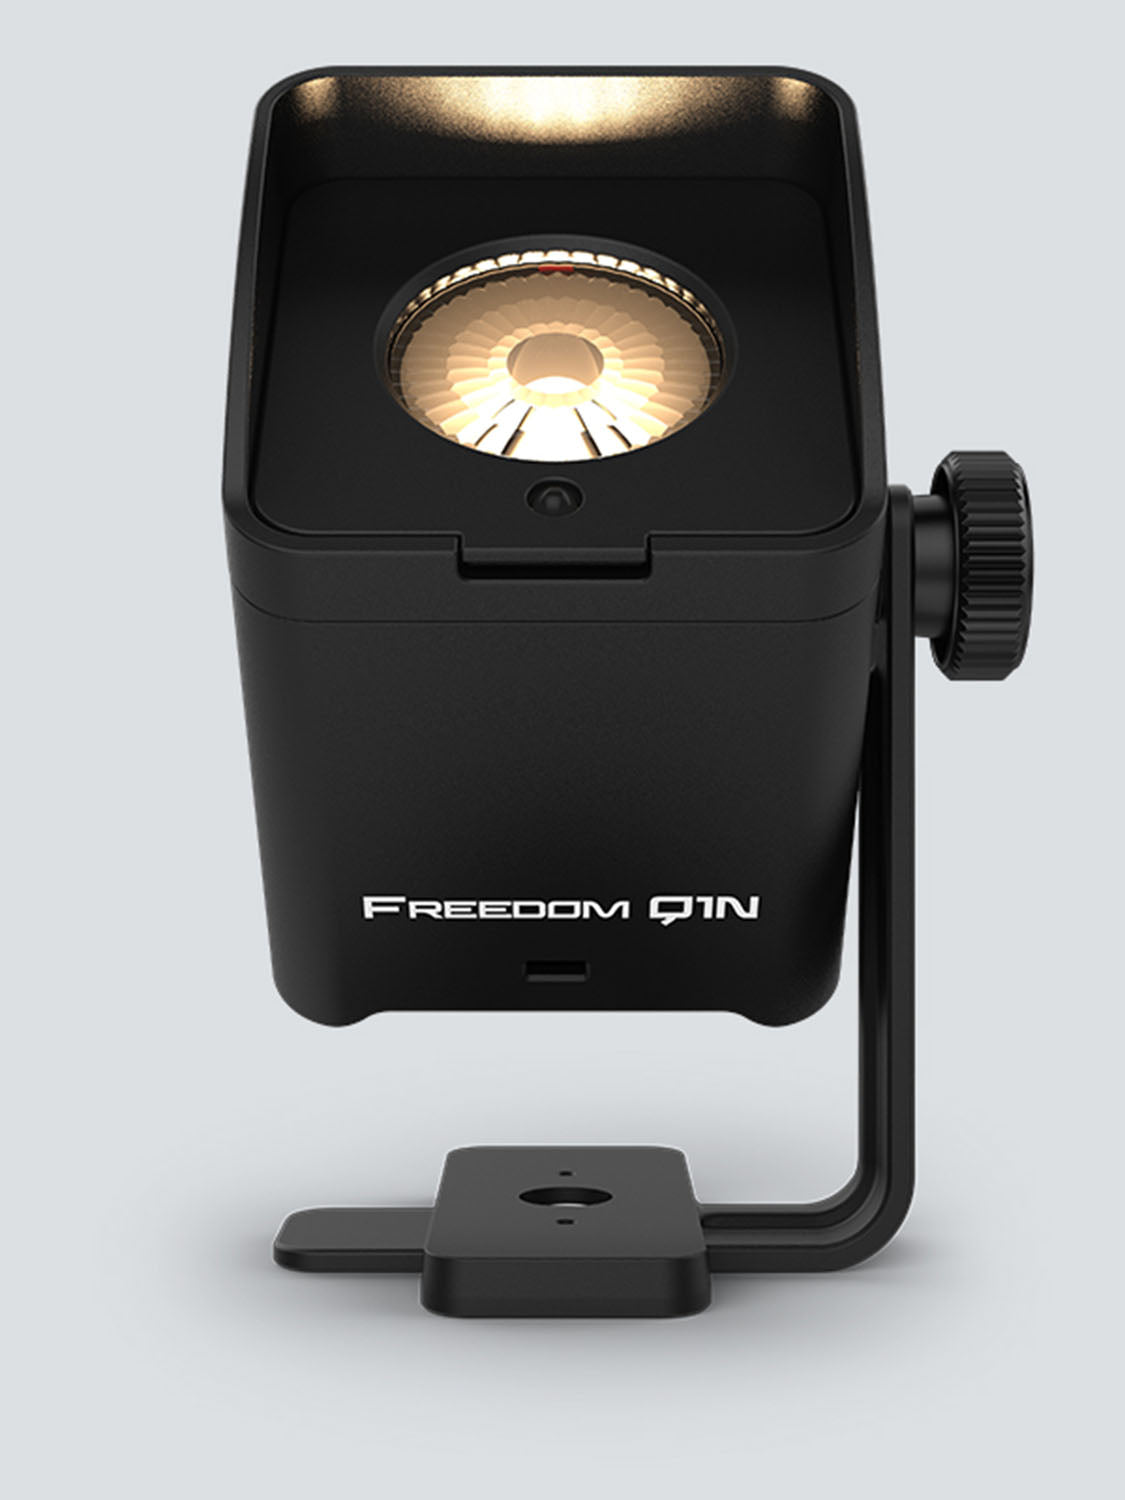 B-Stock: Chauvet DJ FREEDOM Q1N Battery Operated 10W LED Wash Light - Hollywood DJ